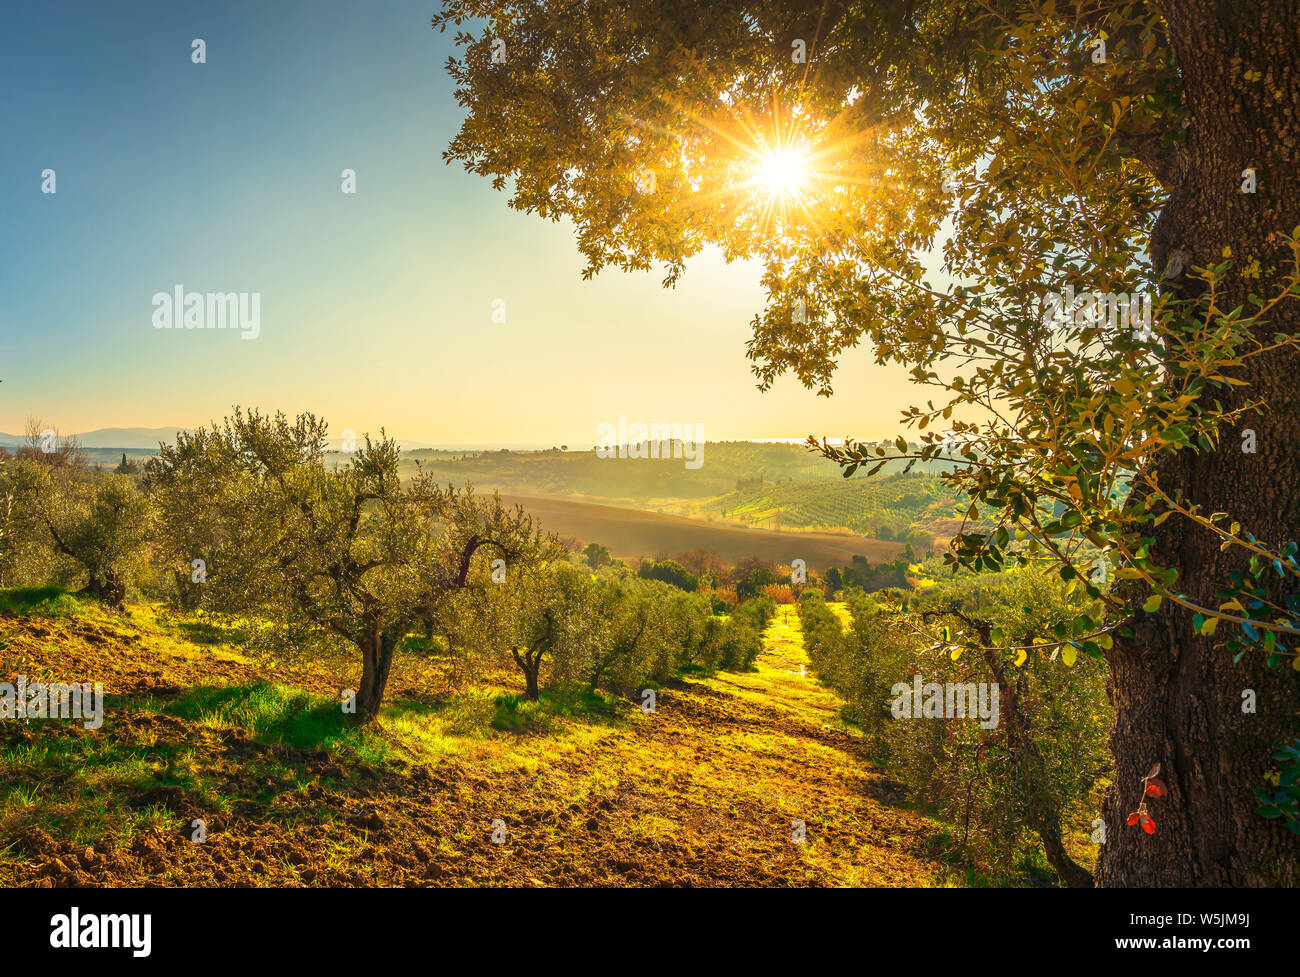 Maremma auf dem Land Panoramaaussicht, Olivenhaine, sanfte Hügel und grüne Felder auf den Sonnenuntergang. Meer am Horizont. Casale Marittimo, Pisa, Toskana Italien E Stockfoto